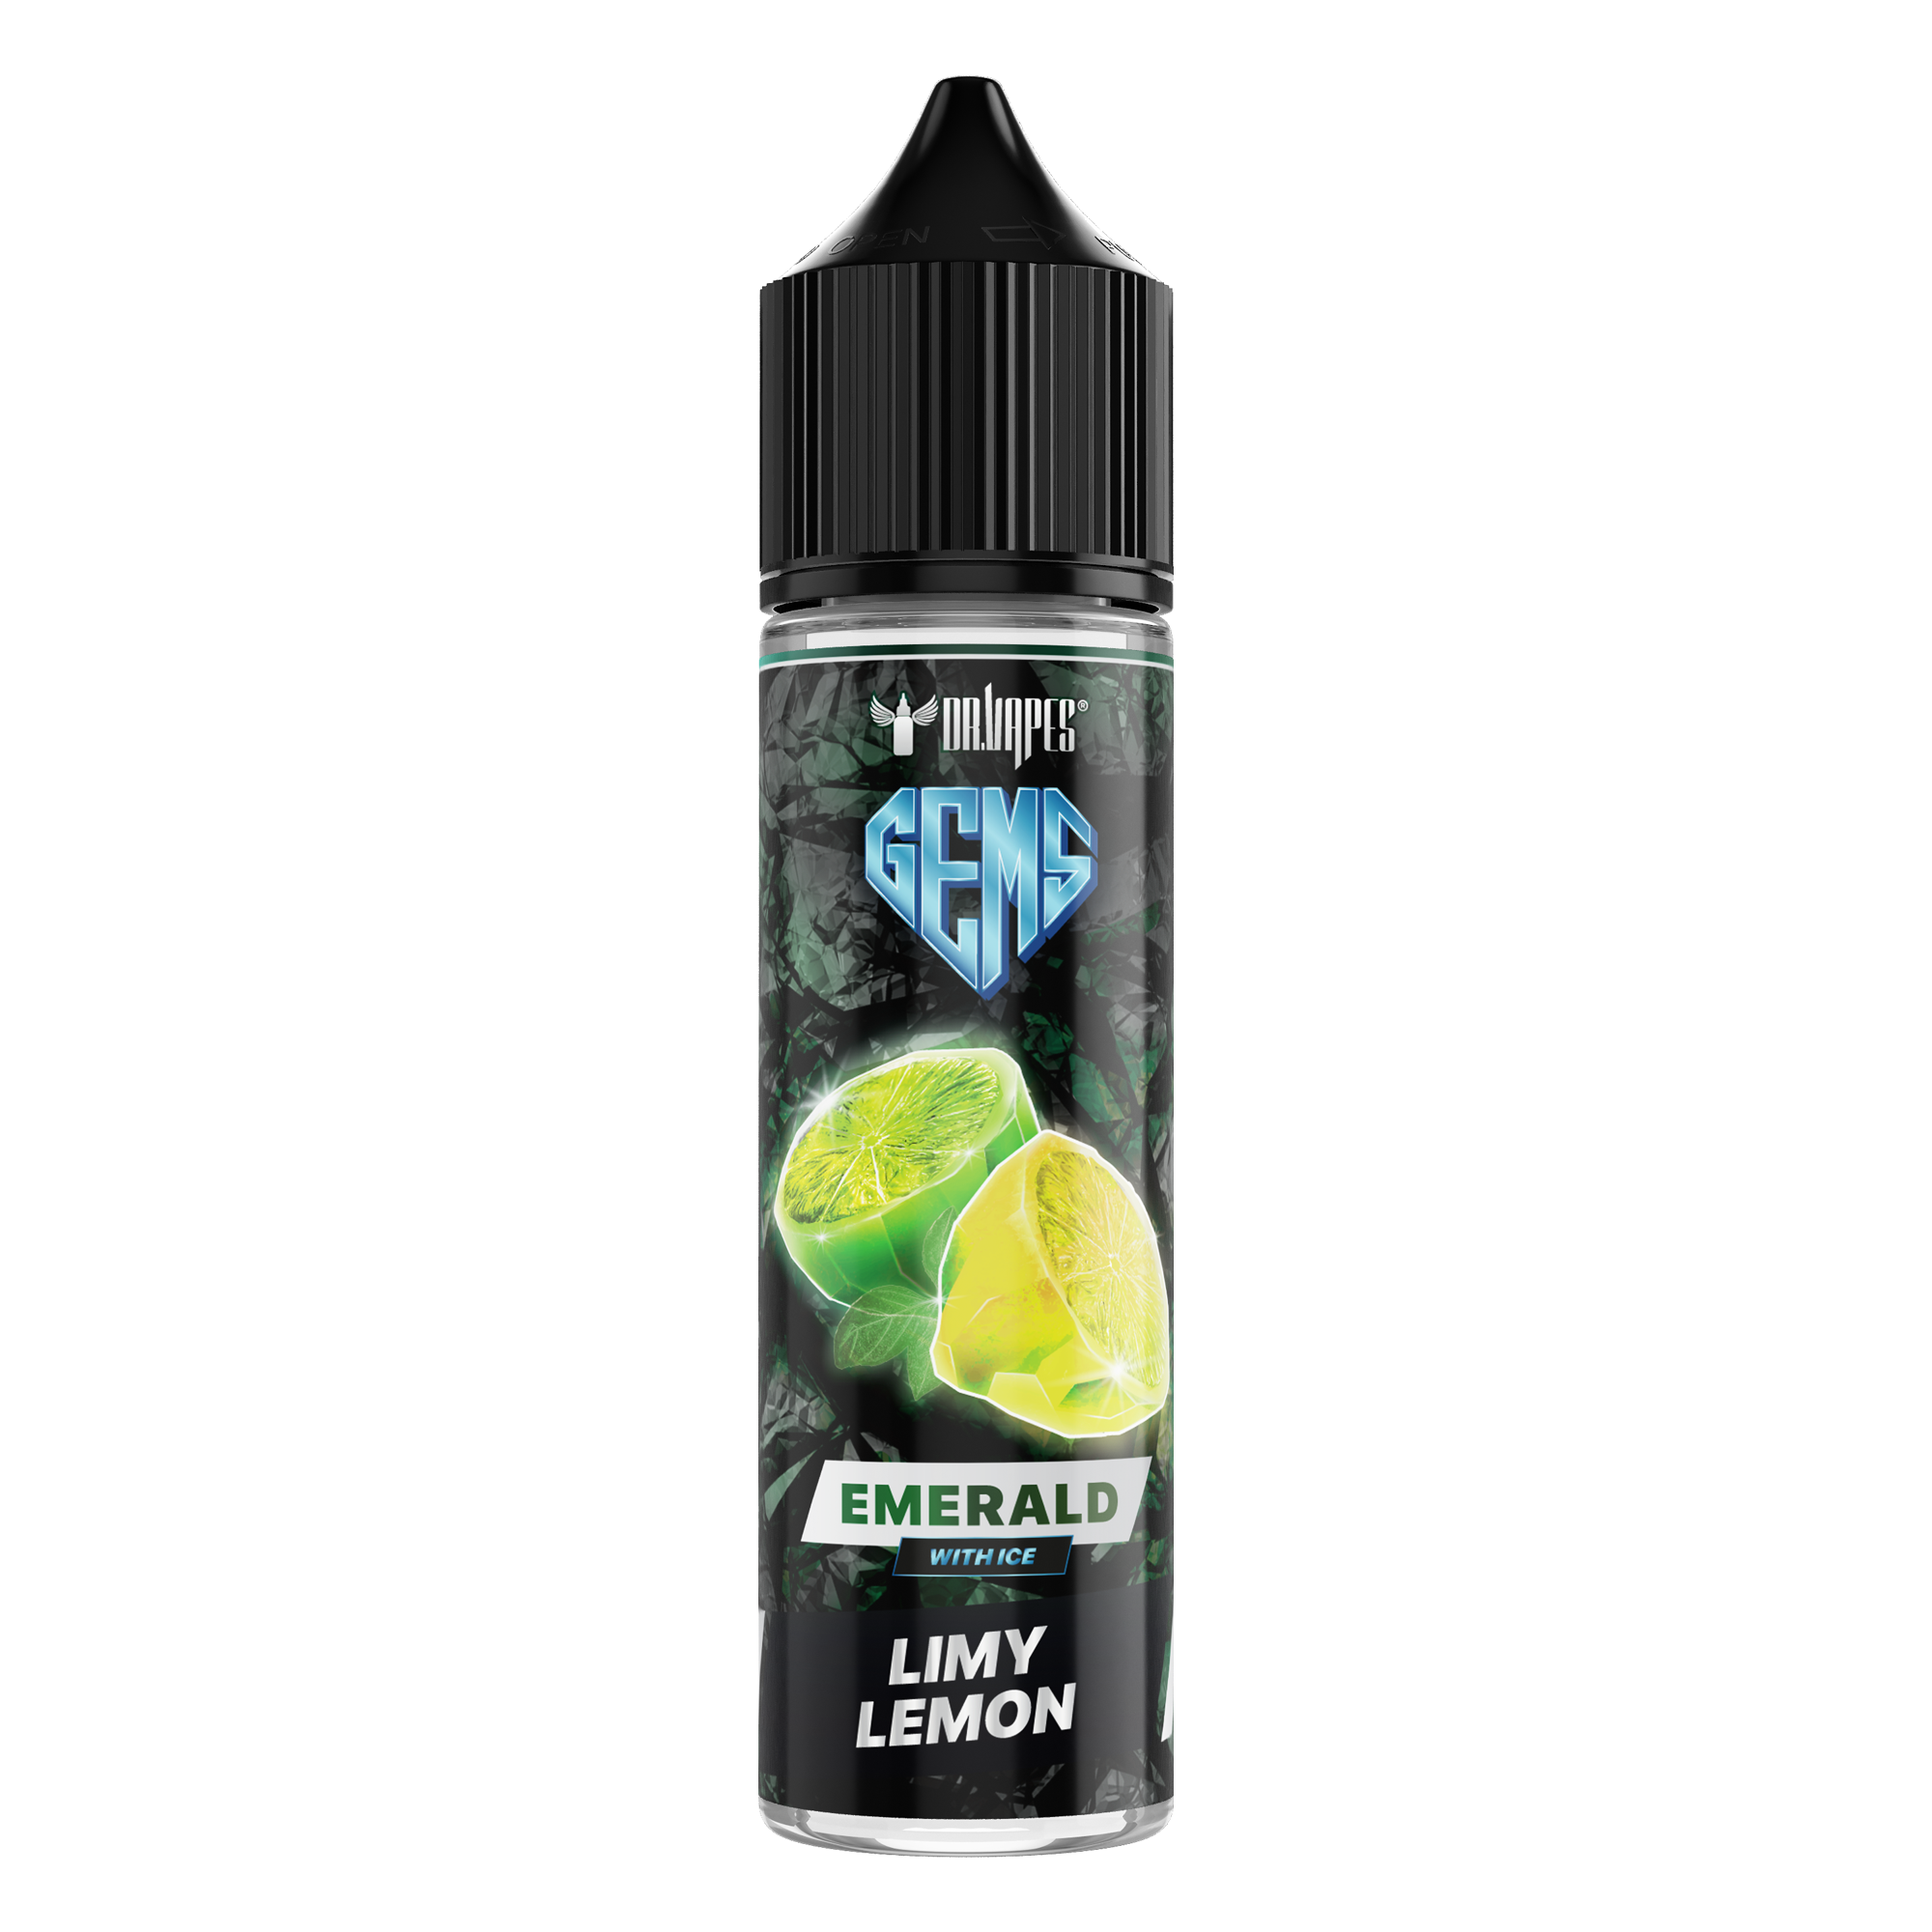 Dr Vapes Gems Emerald Limy Lemon 0mg 50ml Shortfill